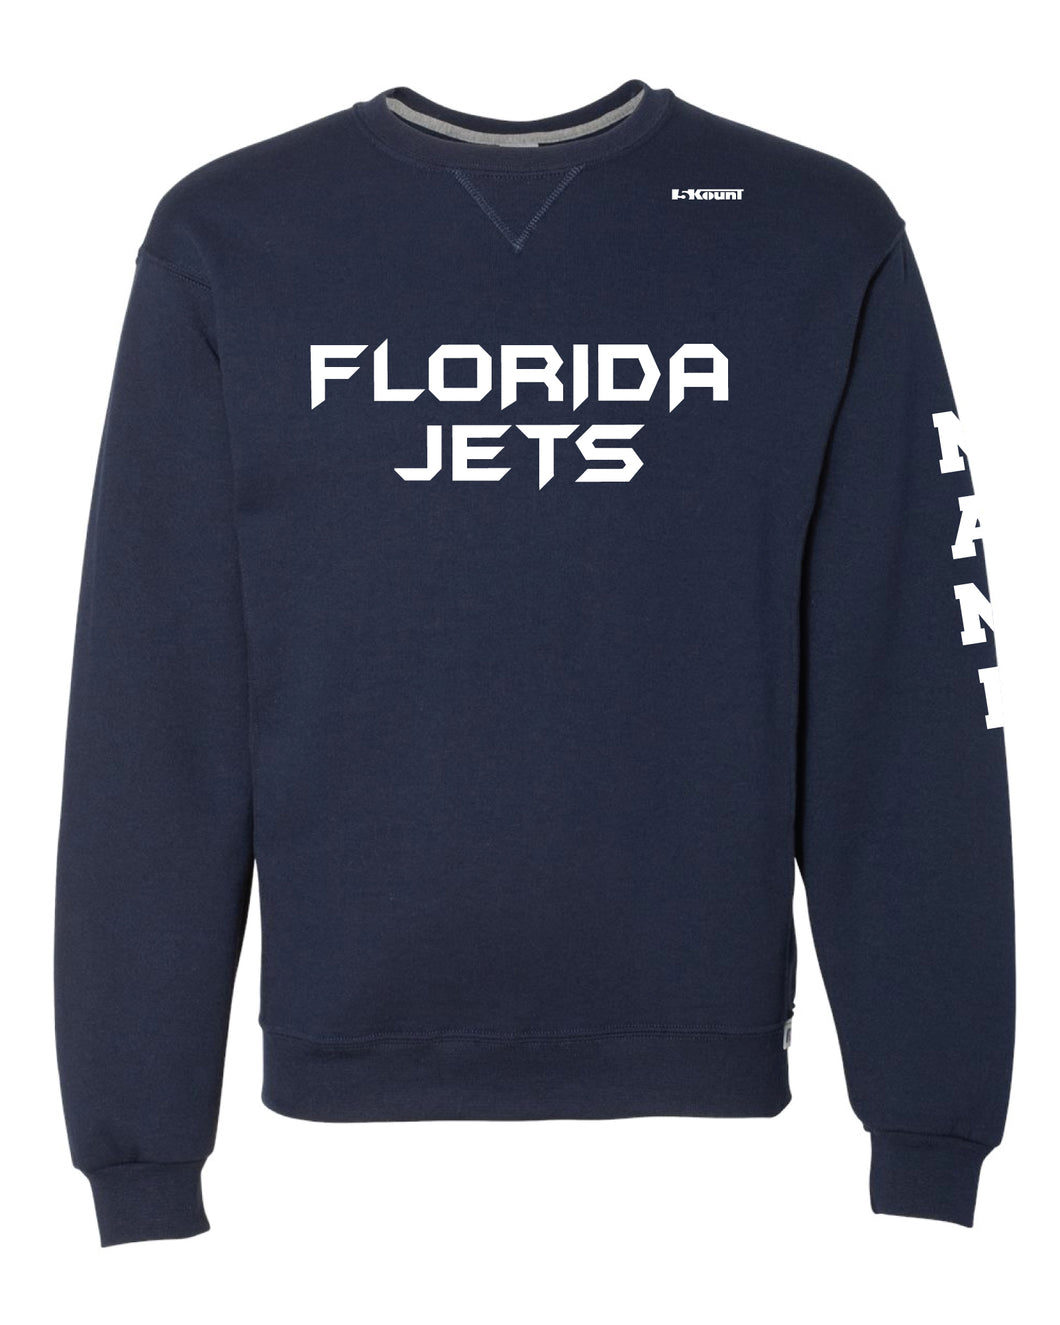 Florida Jets Wrestling Russell Athletic Cotton Crewneck Sweatshirt- Navy - 5KounT2018